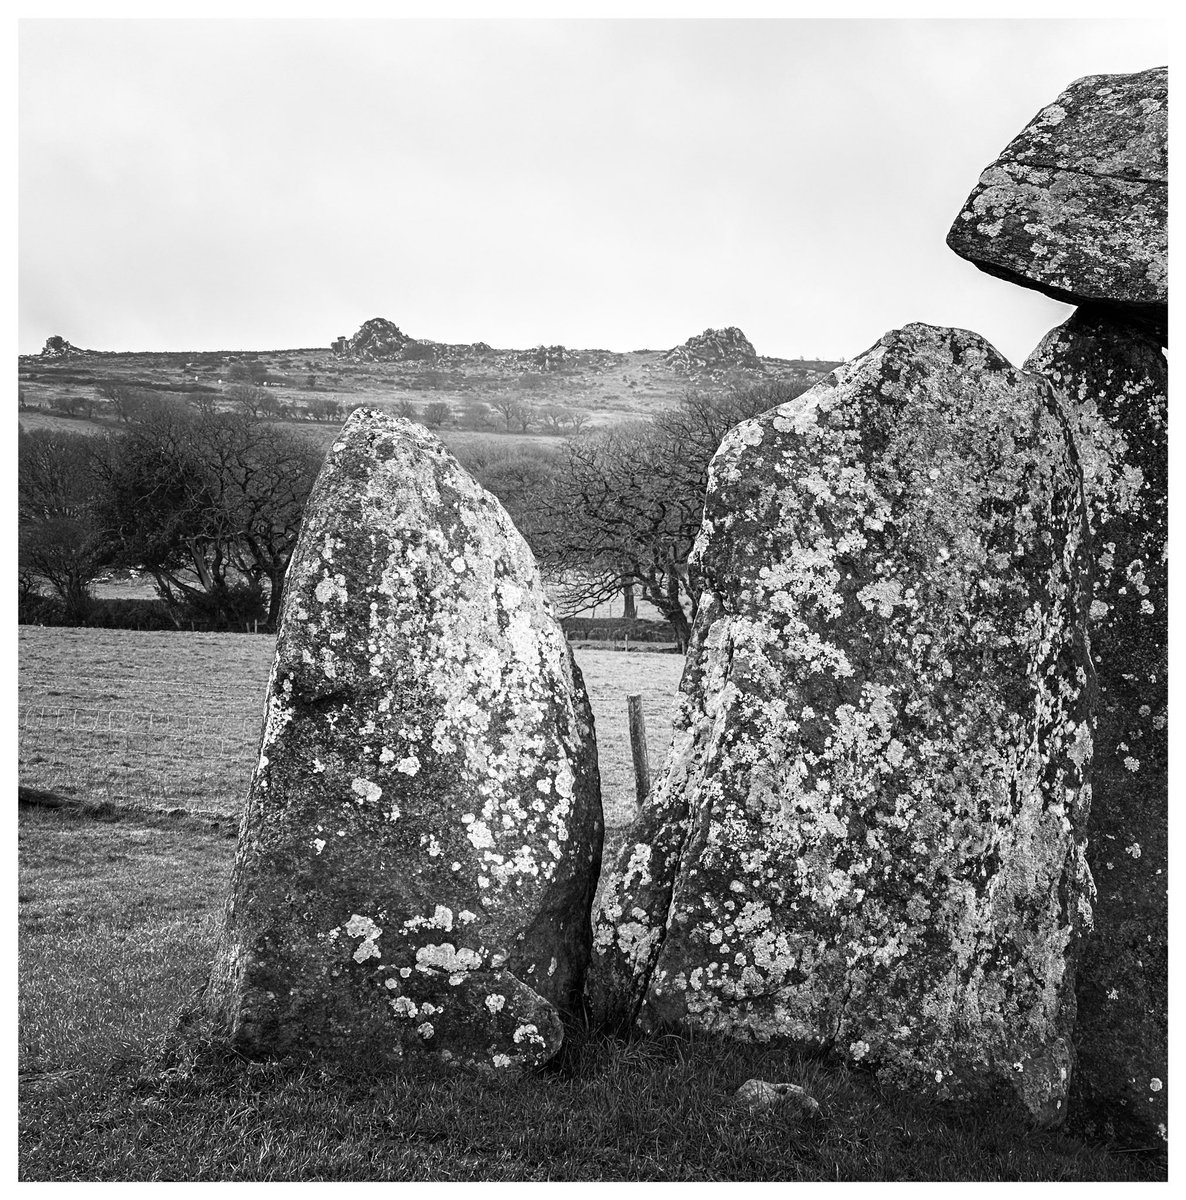 Cerrig / Stones #PentreIfan #SirBenfro #Pembrokeshire #Cymru #Wales